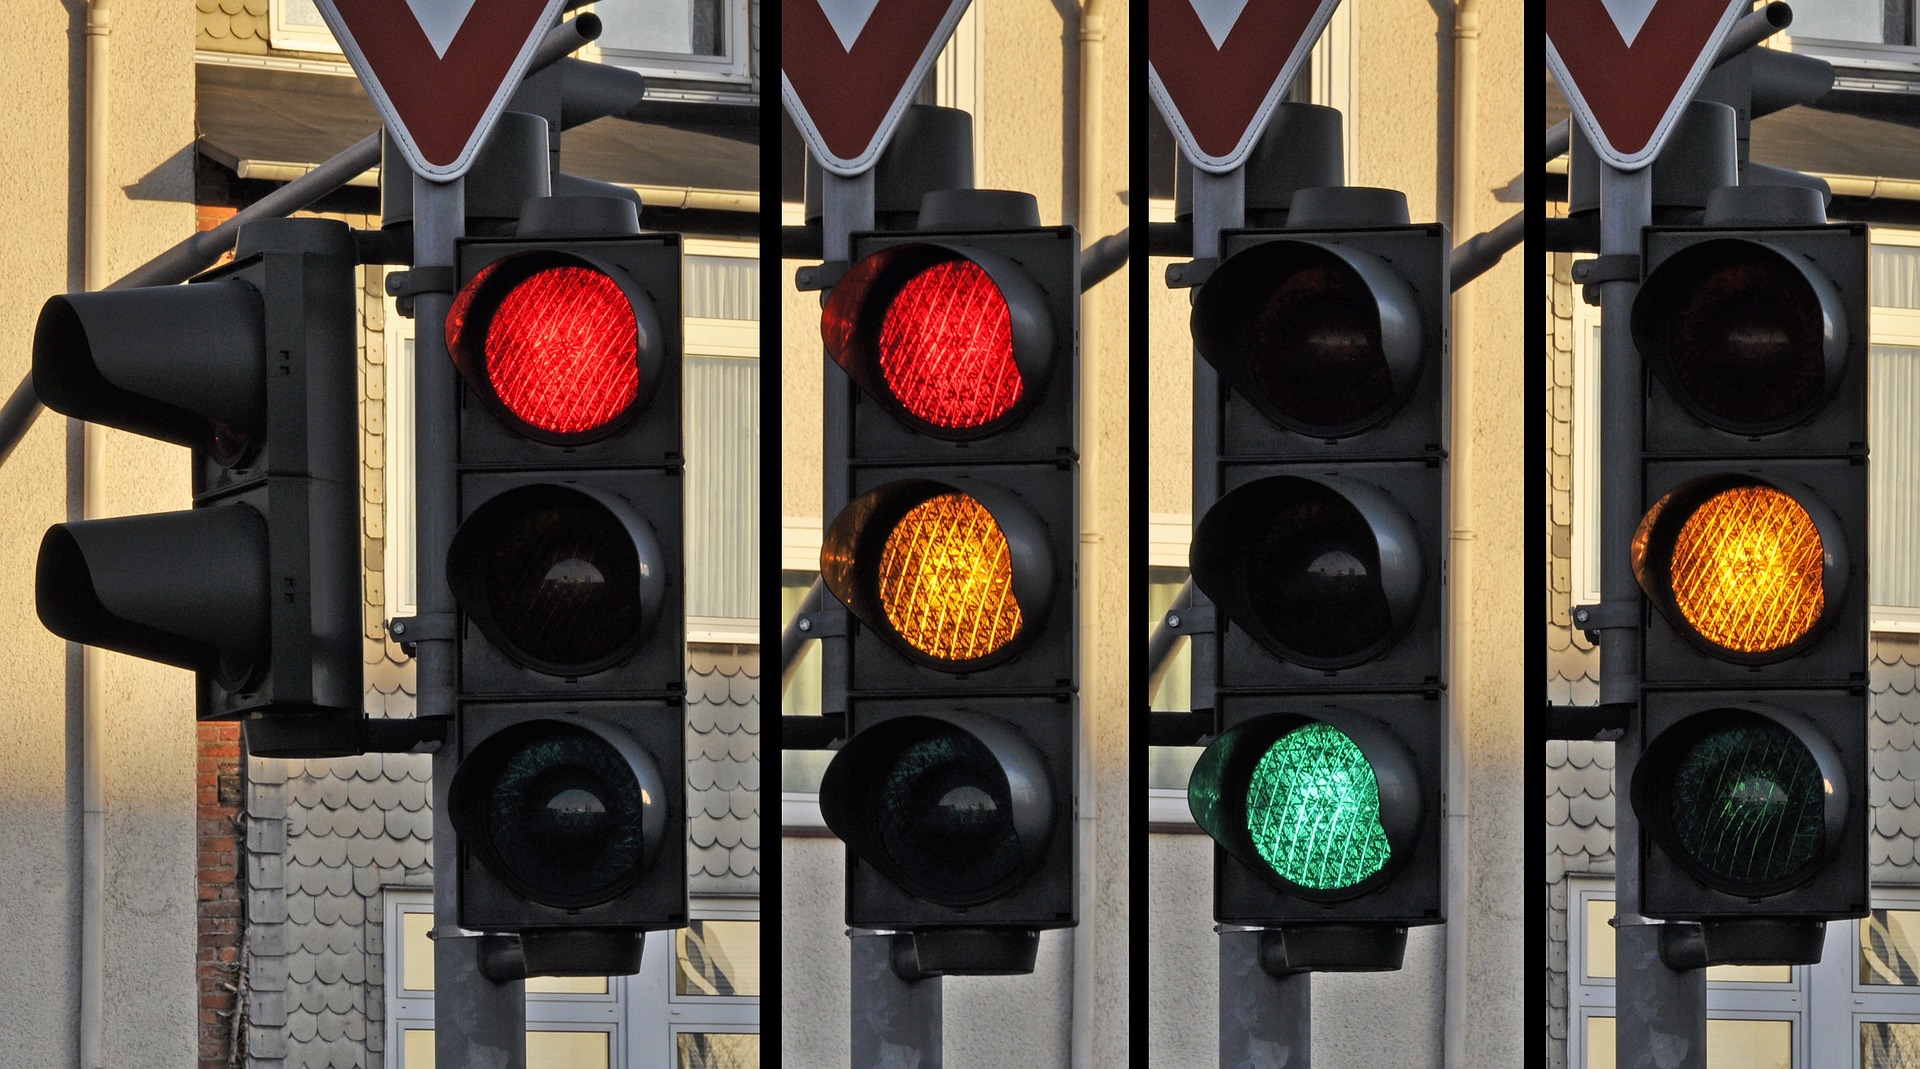 How To Give Feedback Like A Traffic Light